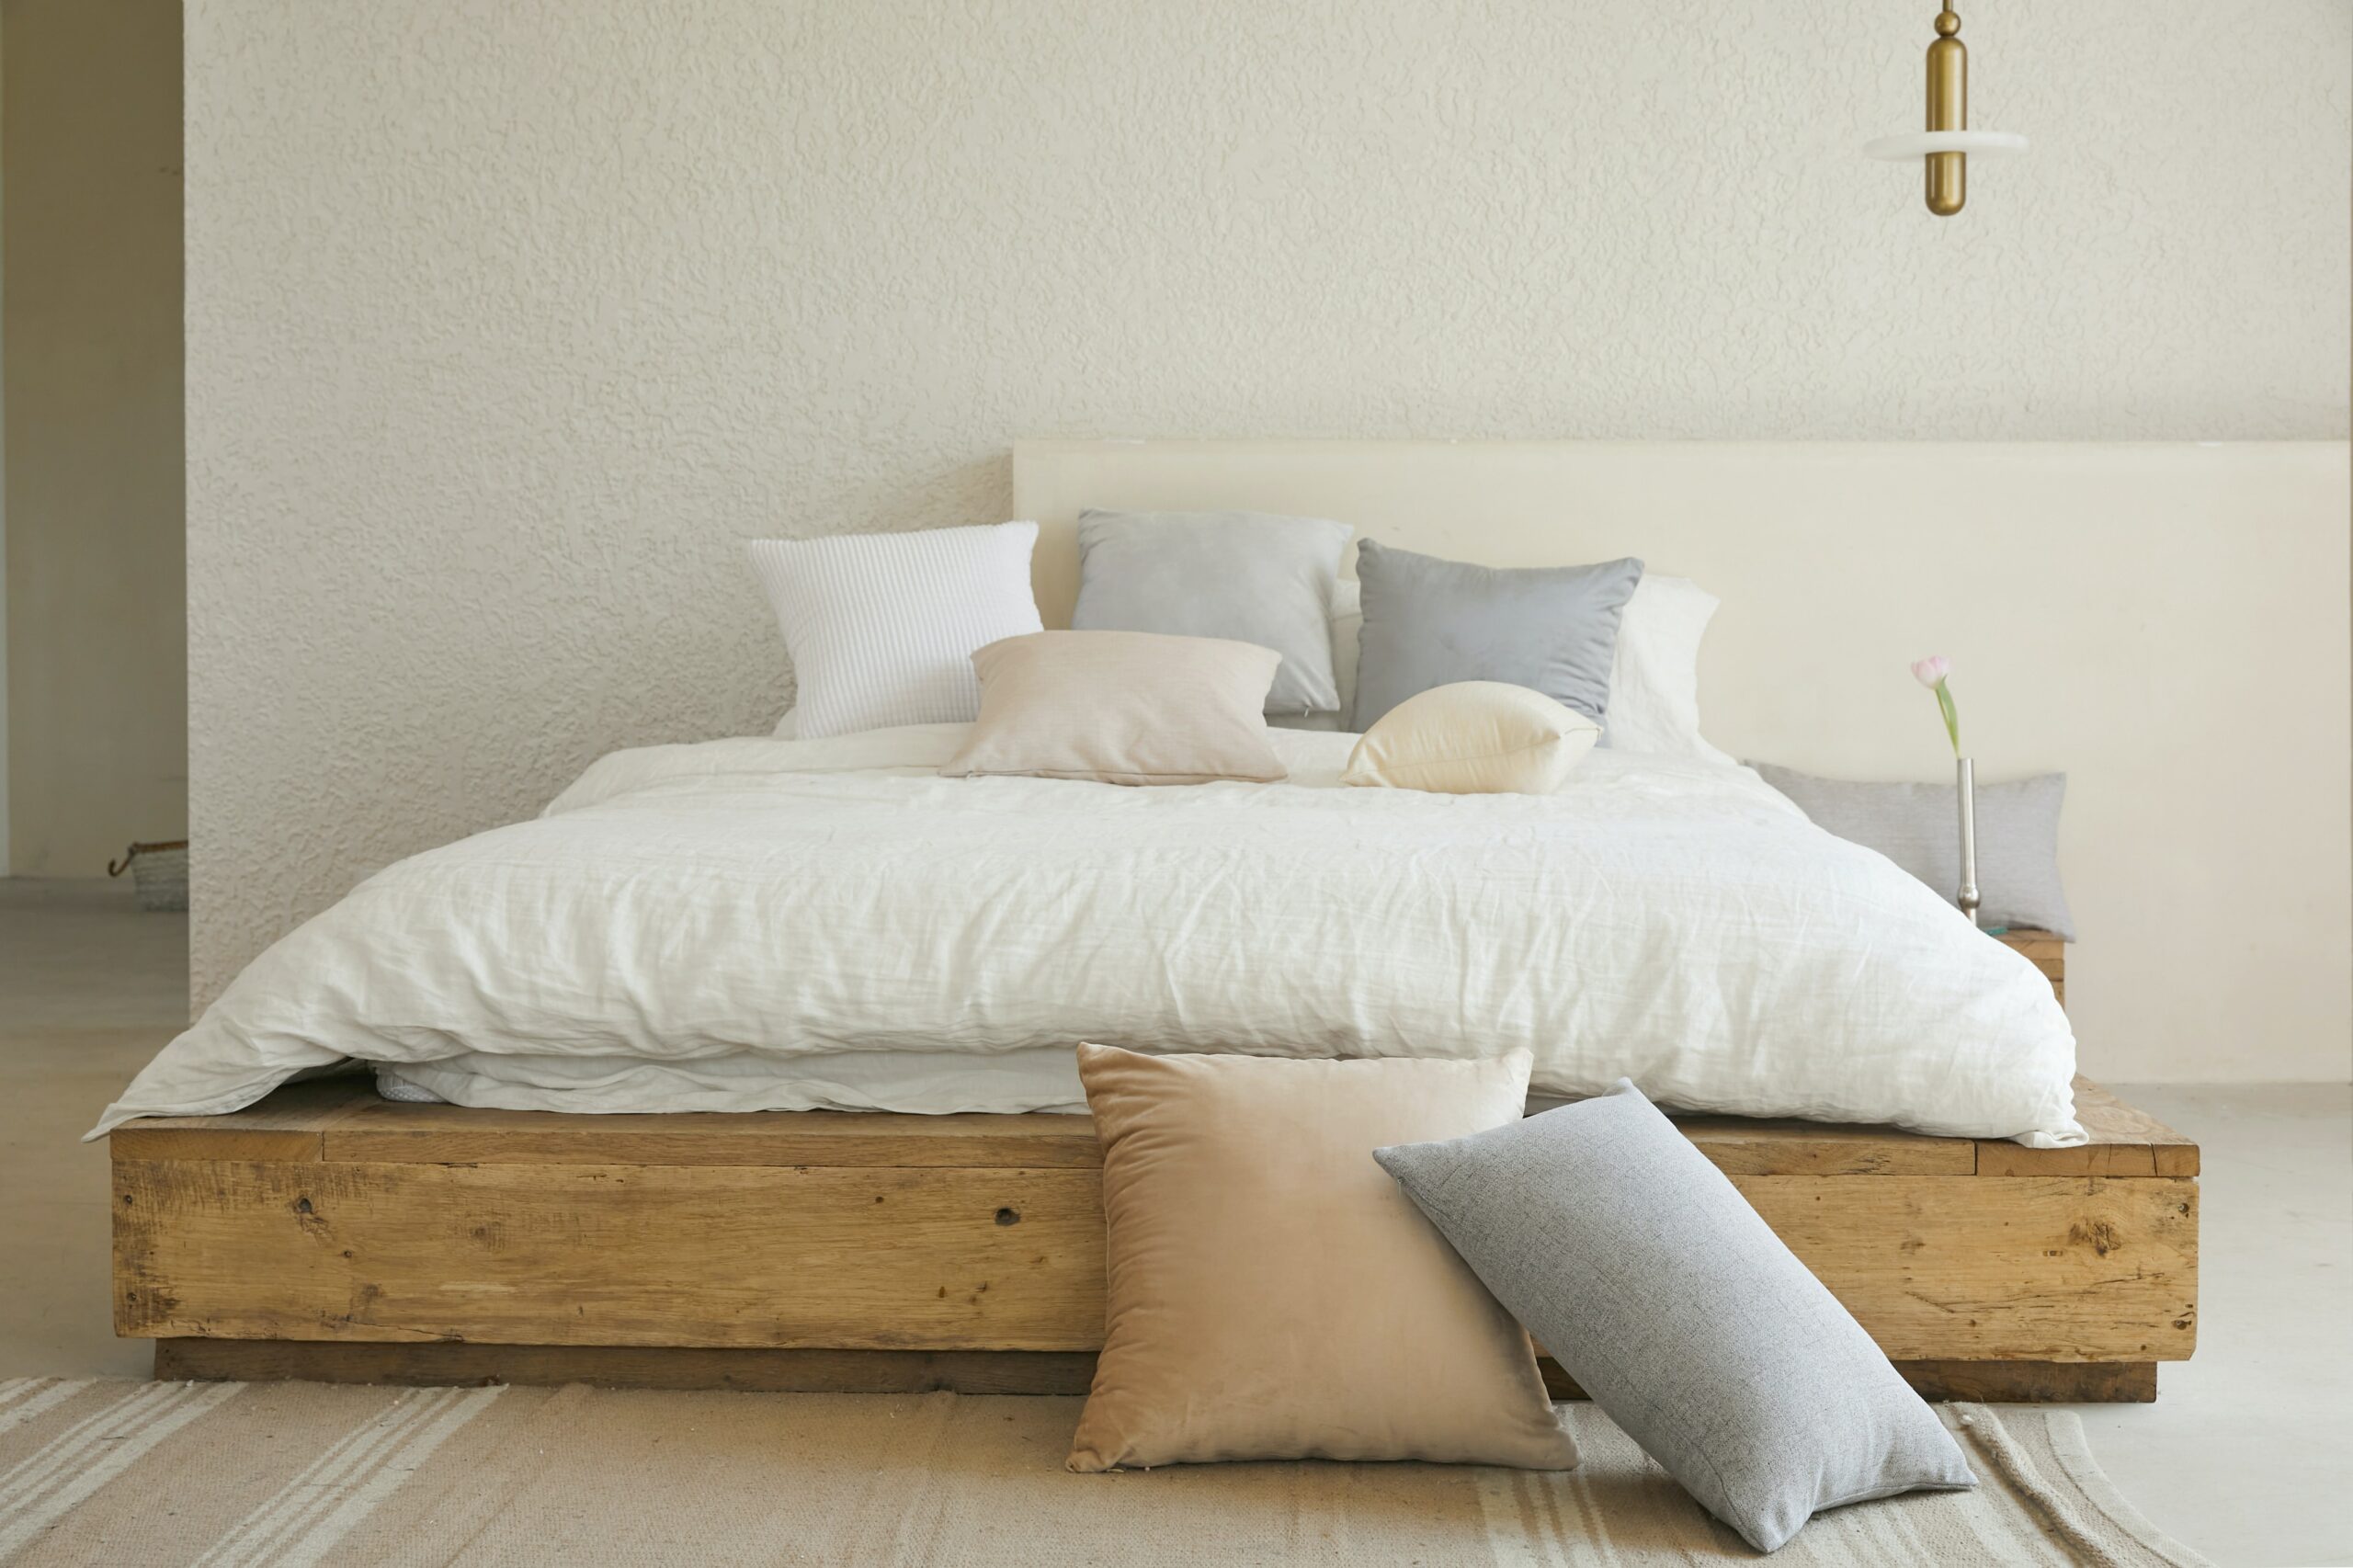 best mattresses for side sleepers nolah